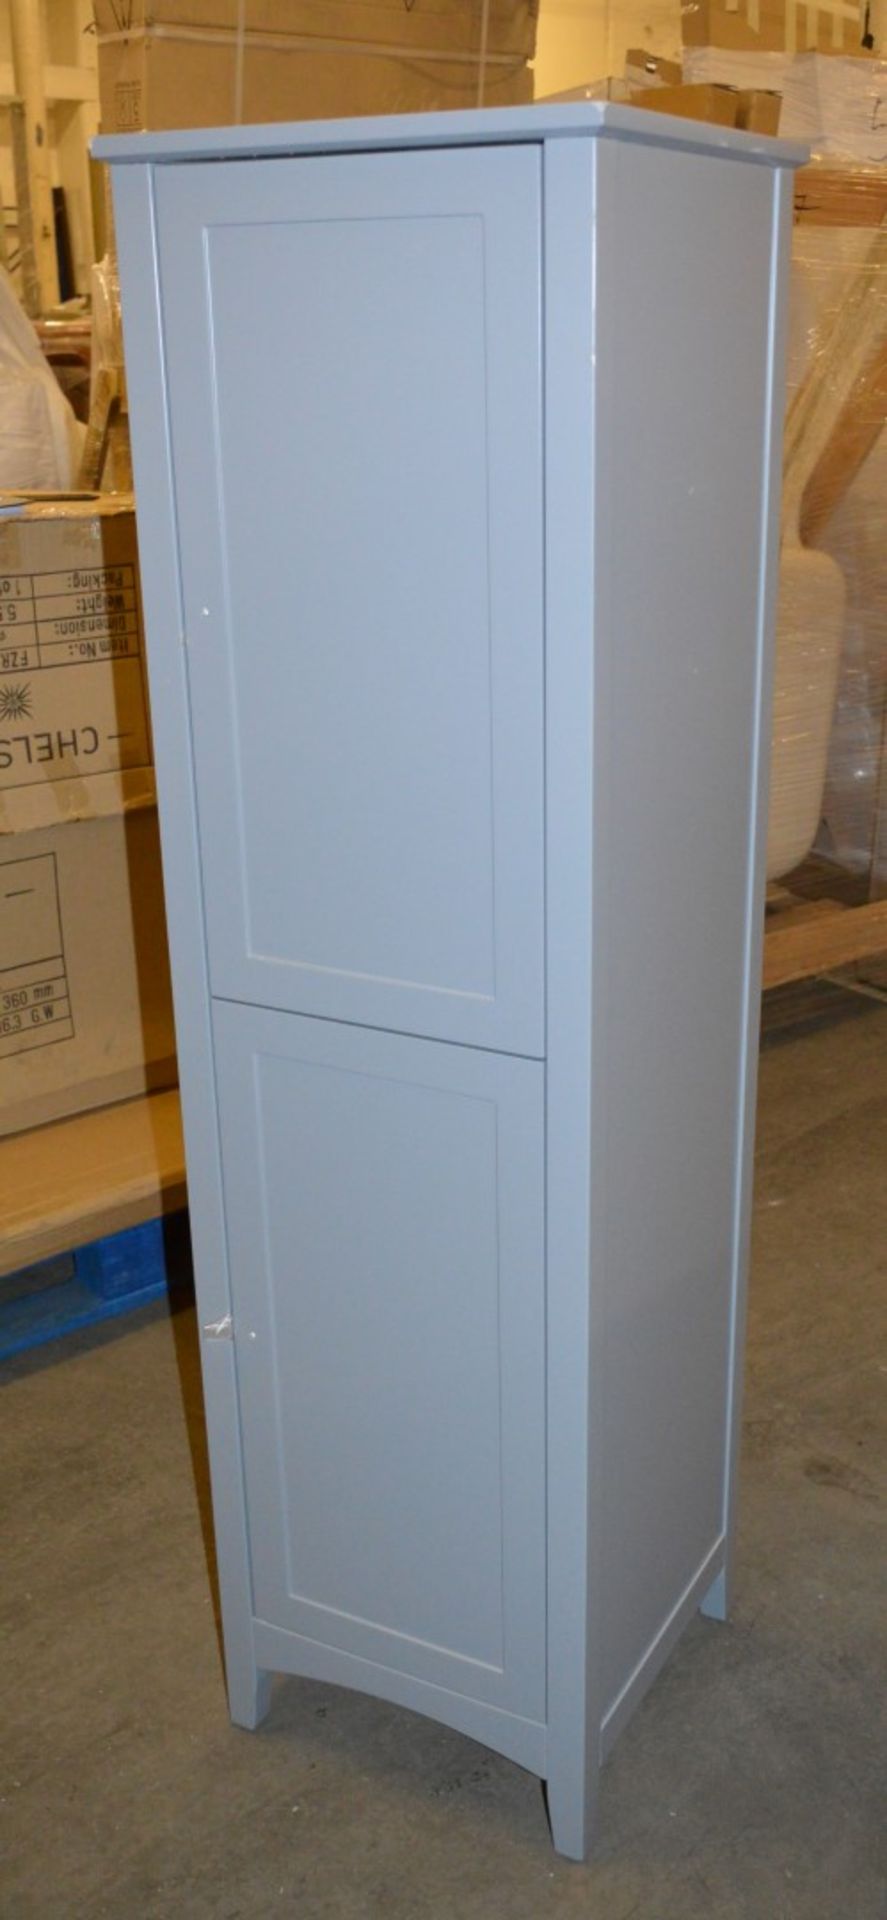 1 x Camberley Tall Bathroom Storage Unit - H1400xW400xD400mm - Contemporary Grey Finish - Unused - Image 4 of 11